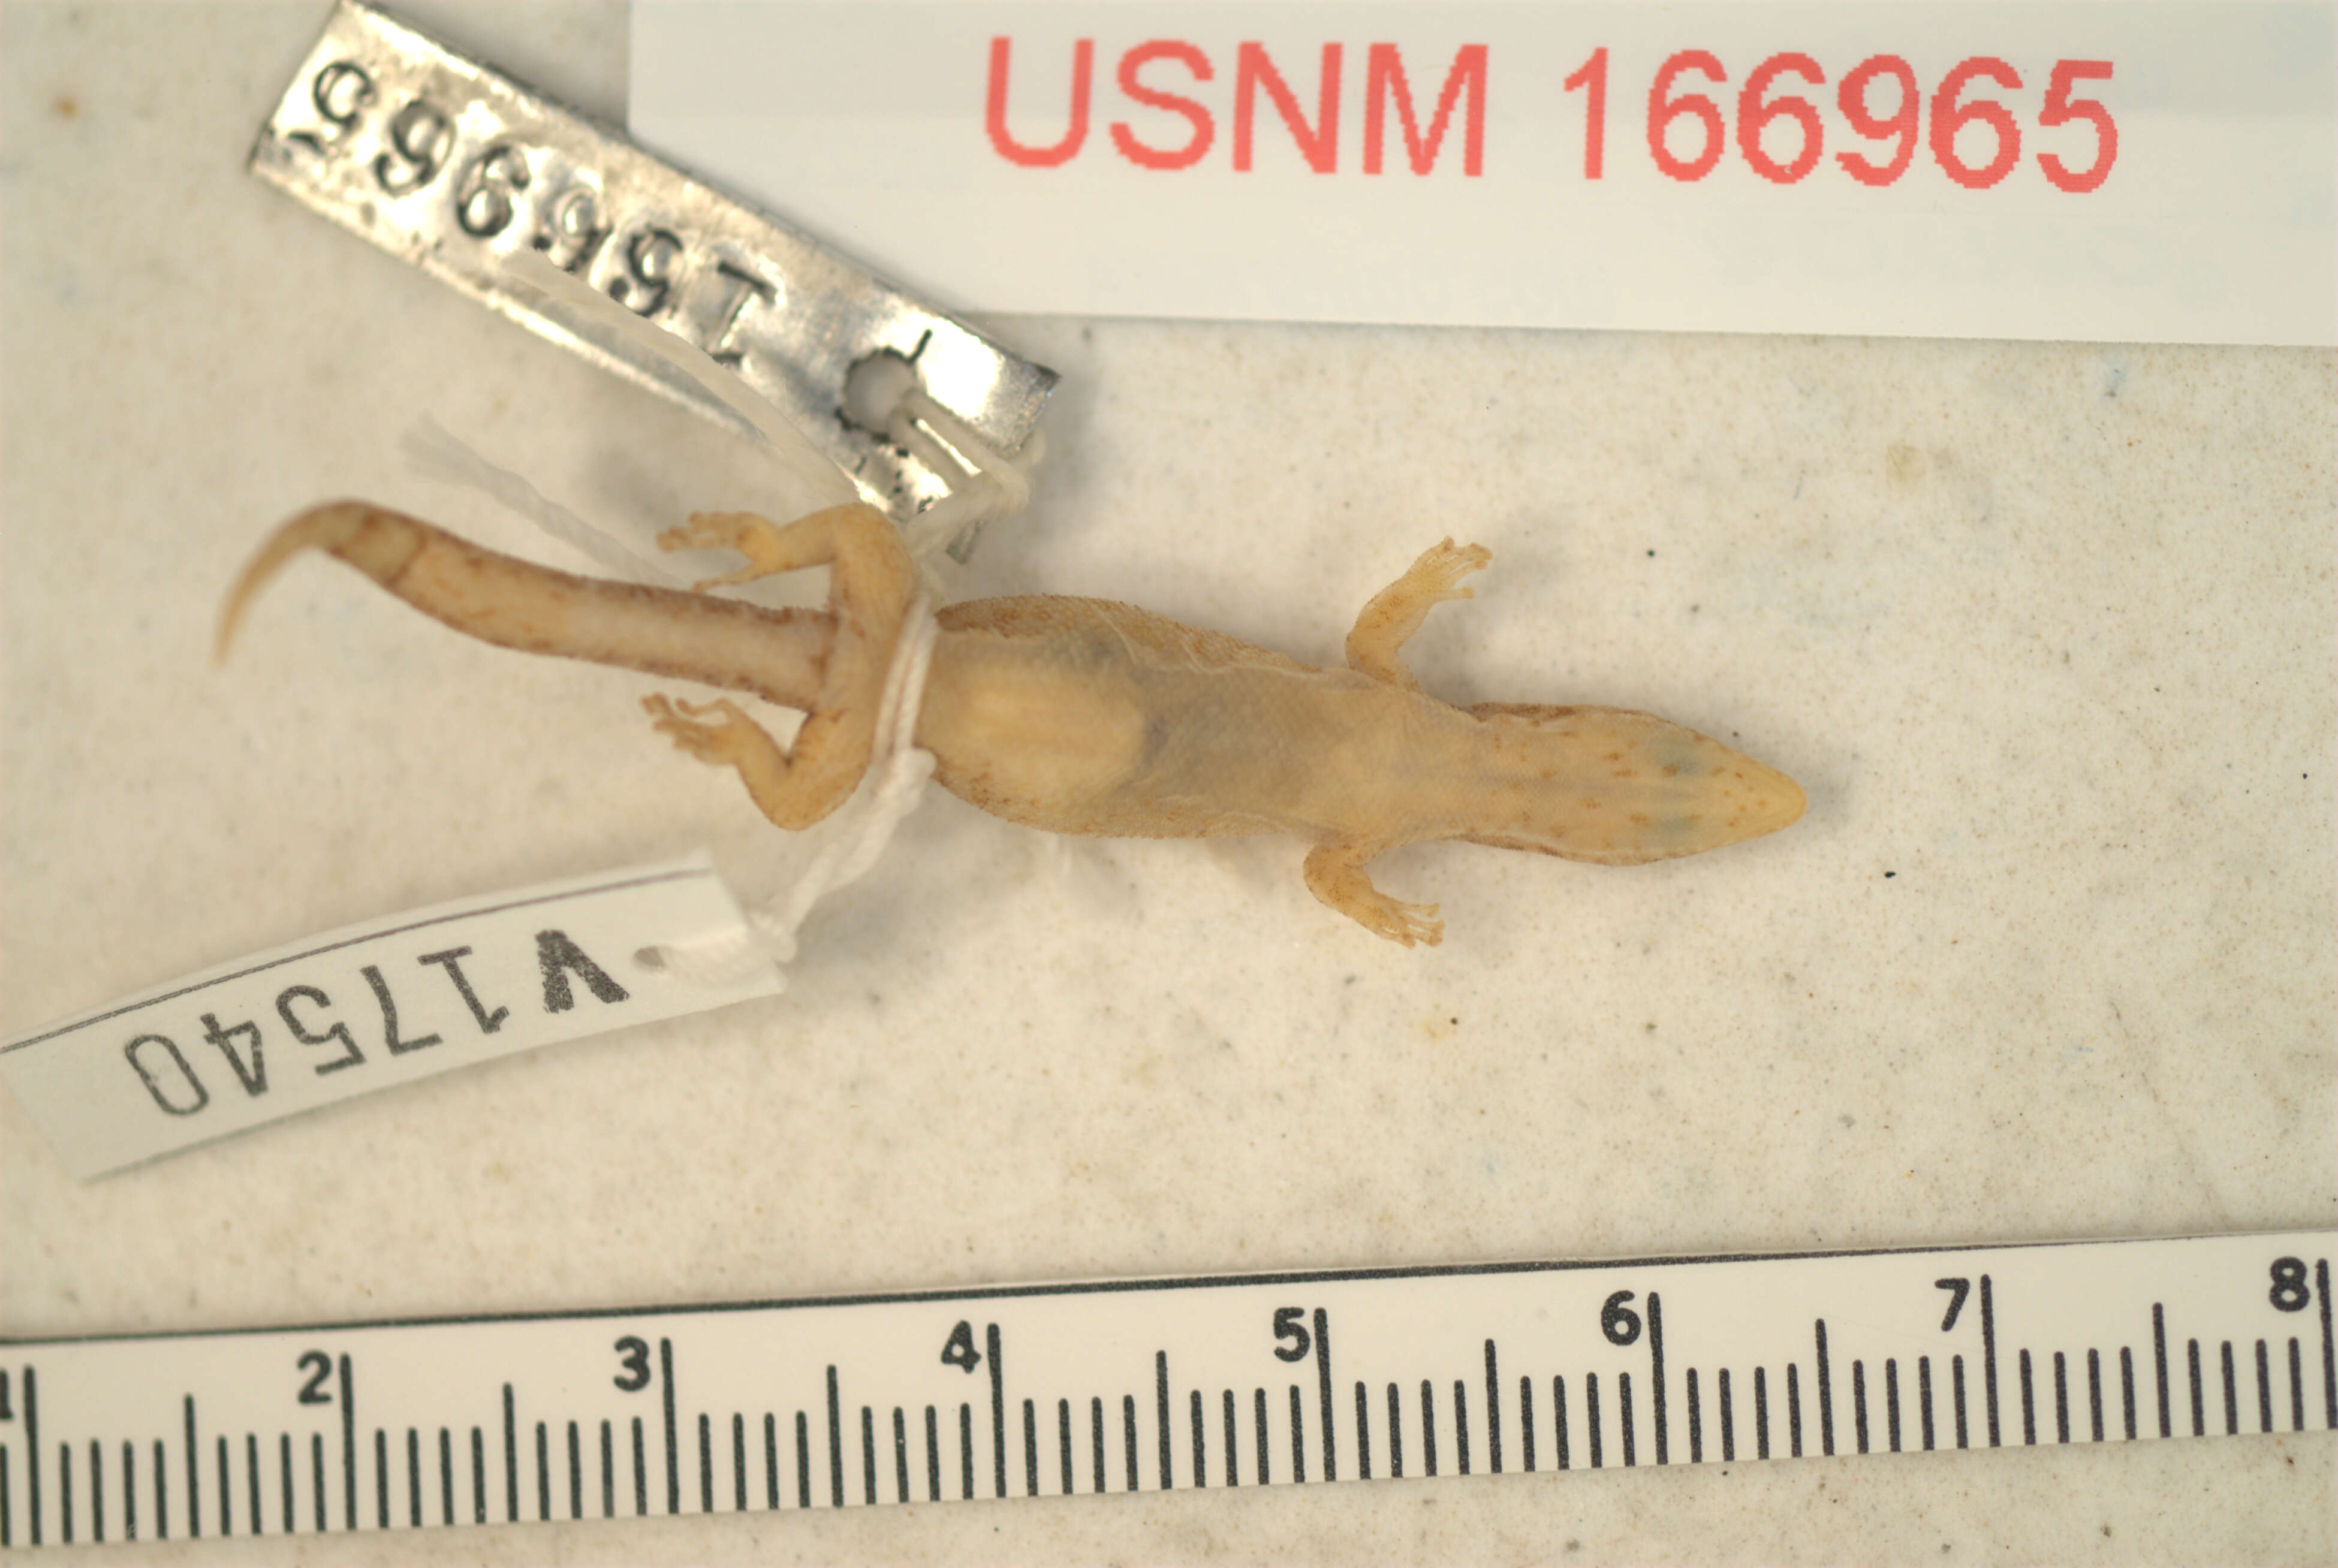 Image of Sphaerodactylus clenchi apocoptus Schwartz 1983